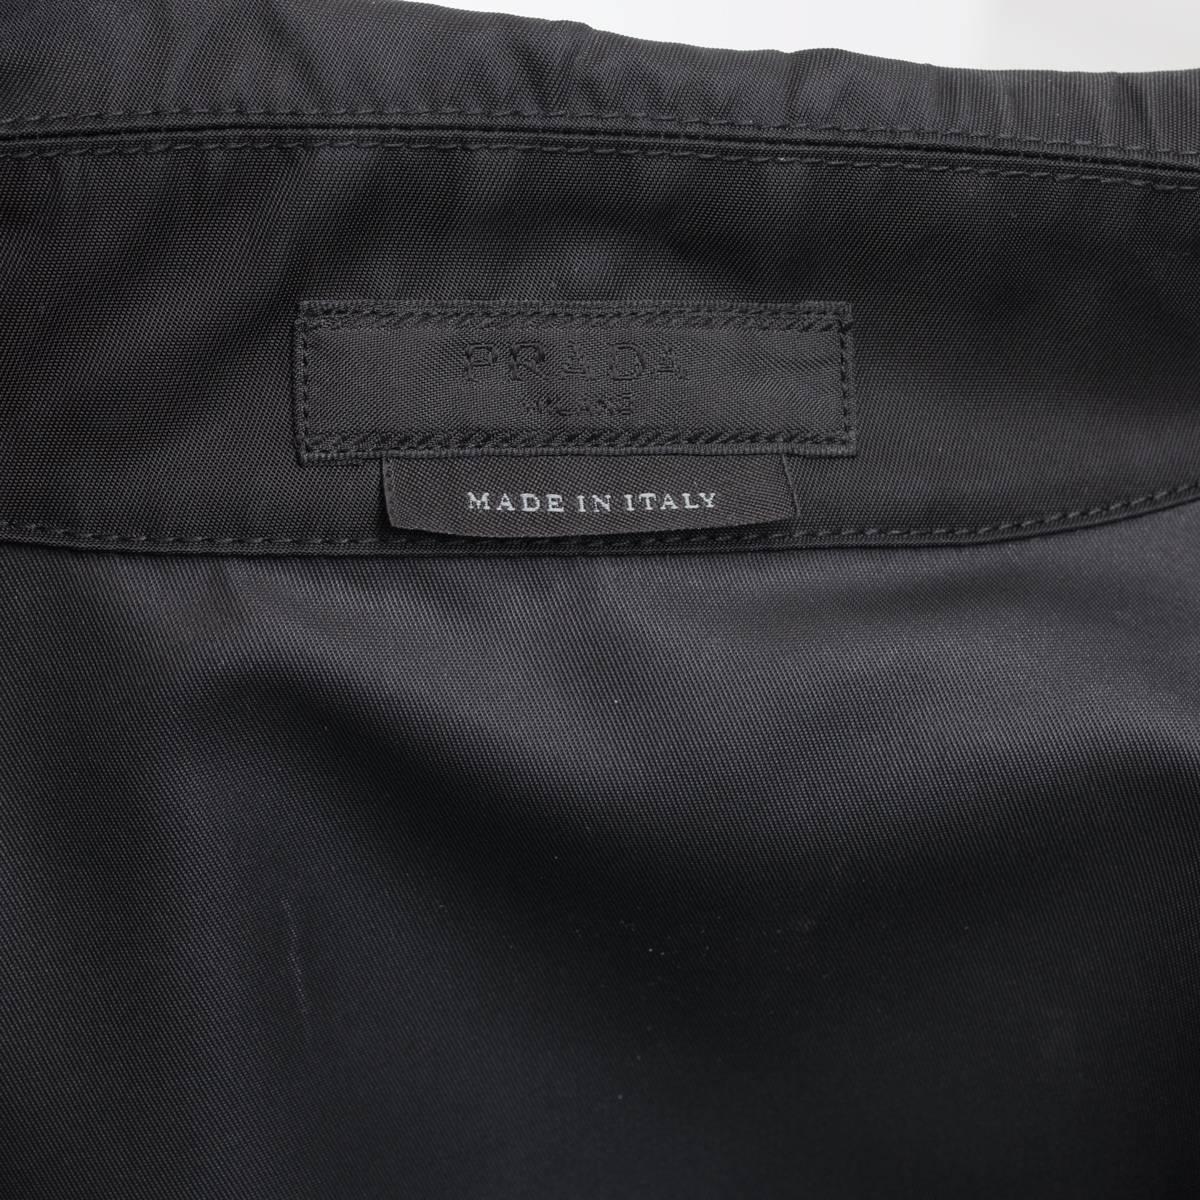 Prada Fall 2015 Black Nylon Short Sleeve Runway Jacket - M 2